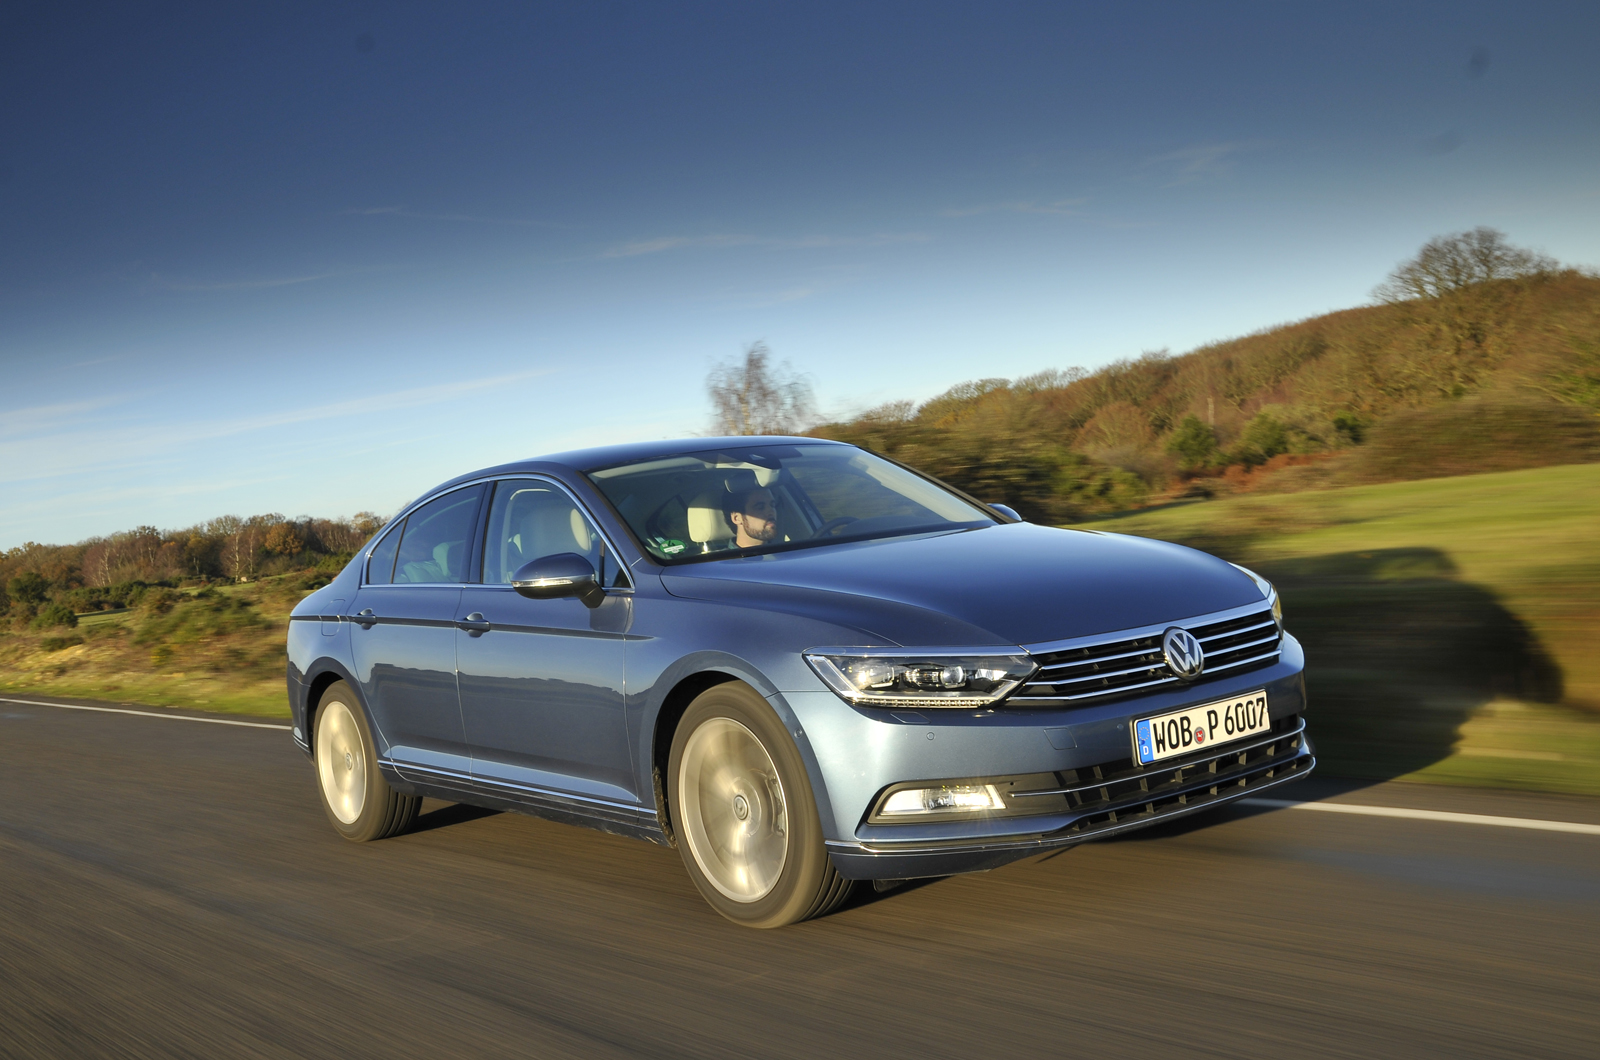 Volkswagen Passat [B8] (2015 - 2019) used car review, Car review